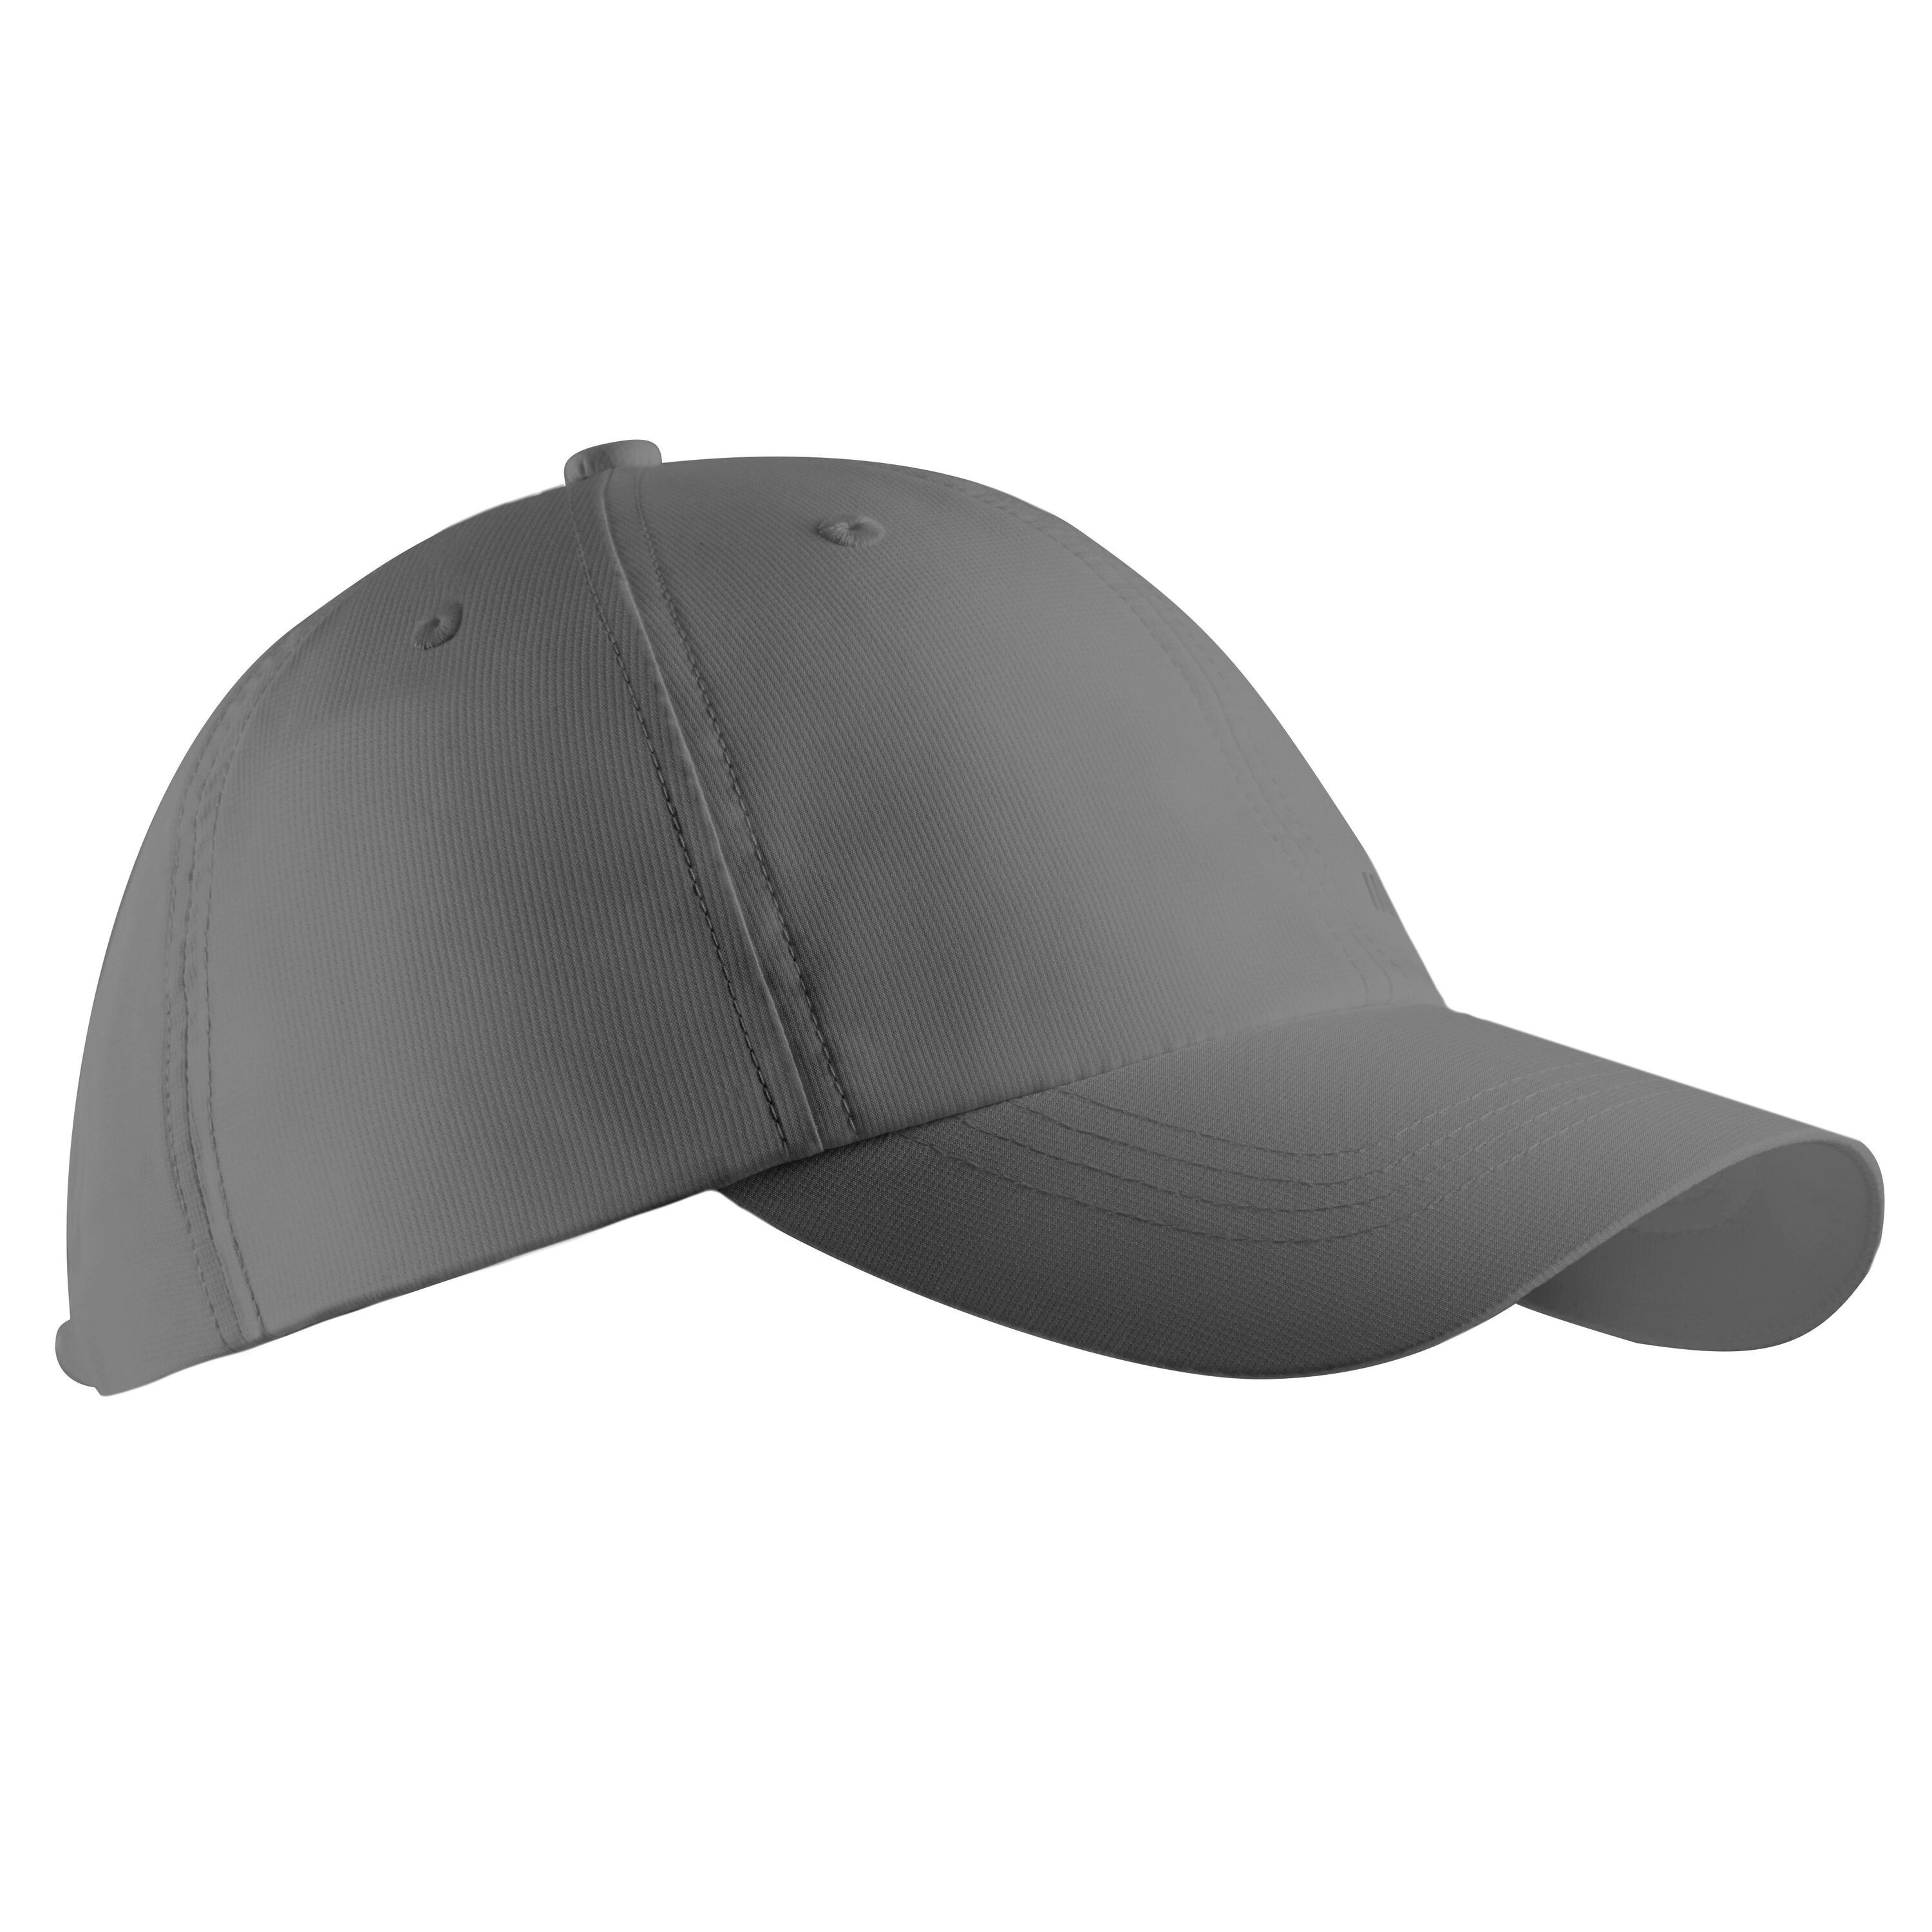 INESIS Adult's golf cap - WW 500 dark grey